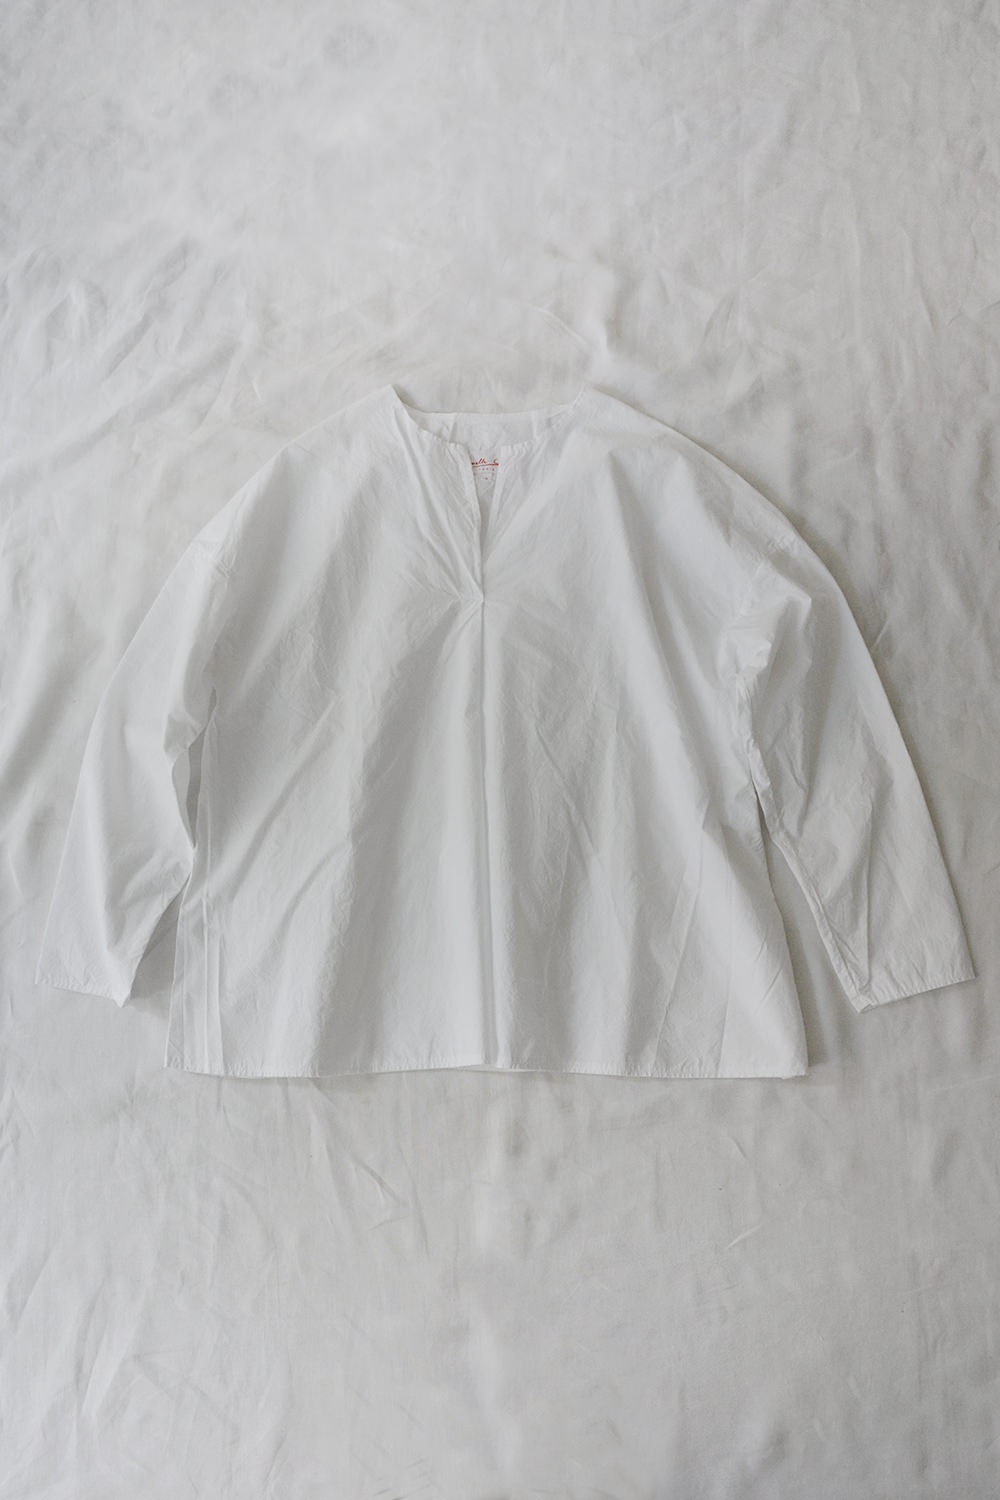 manuelle guibal cotton blouse top white top picture